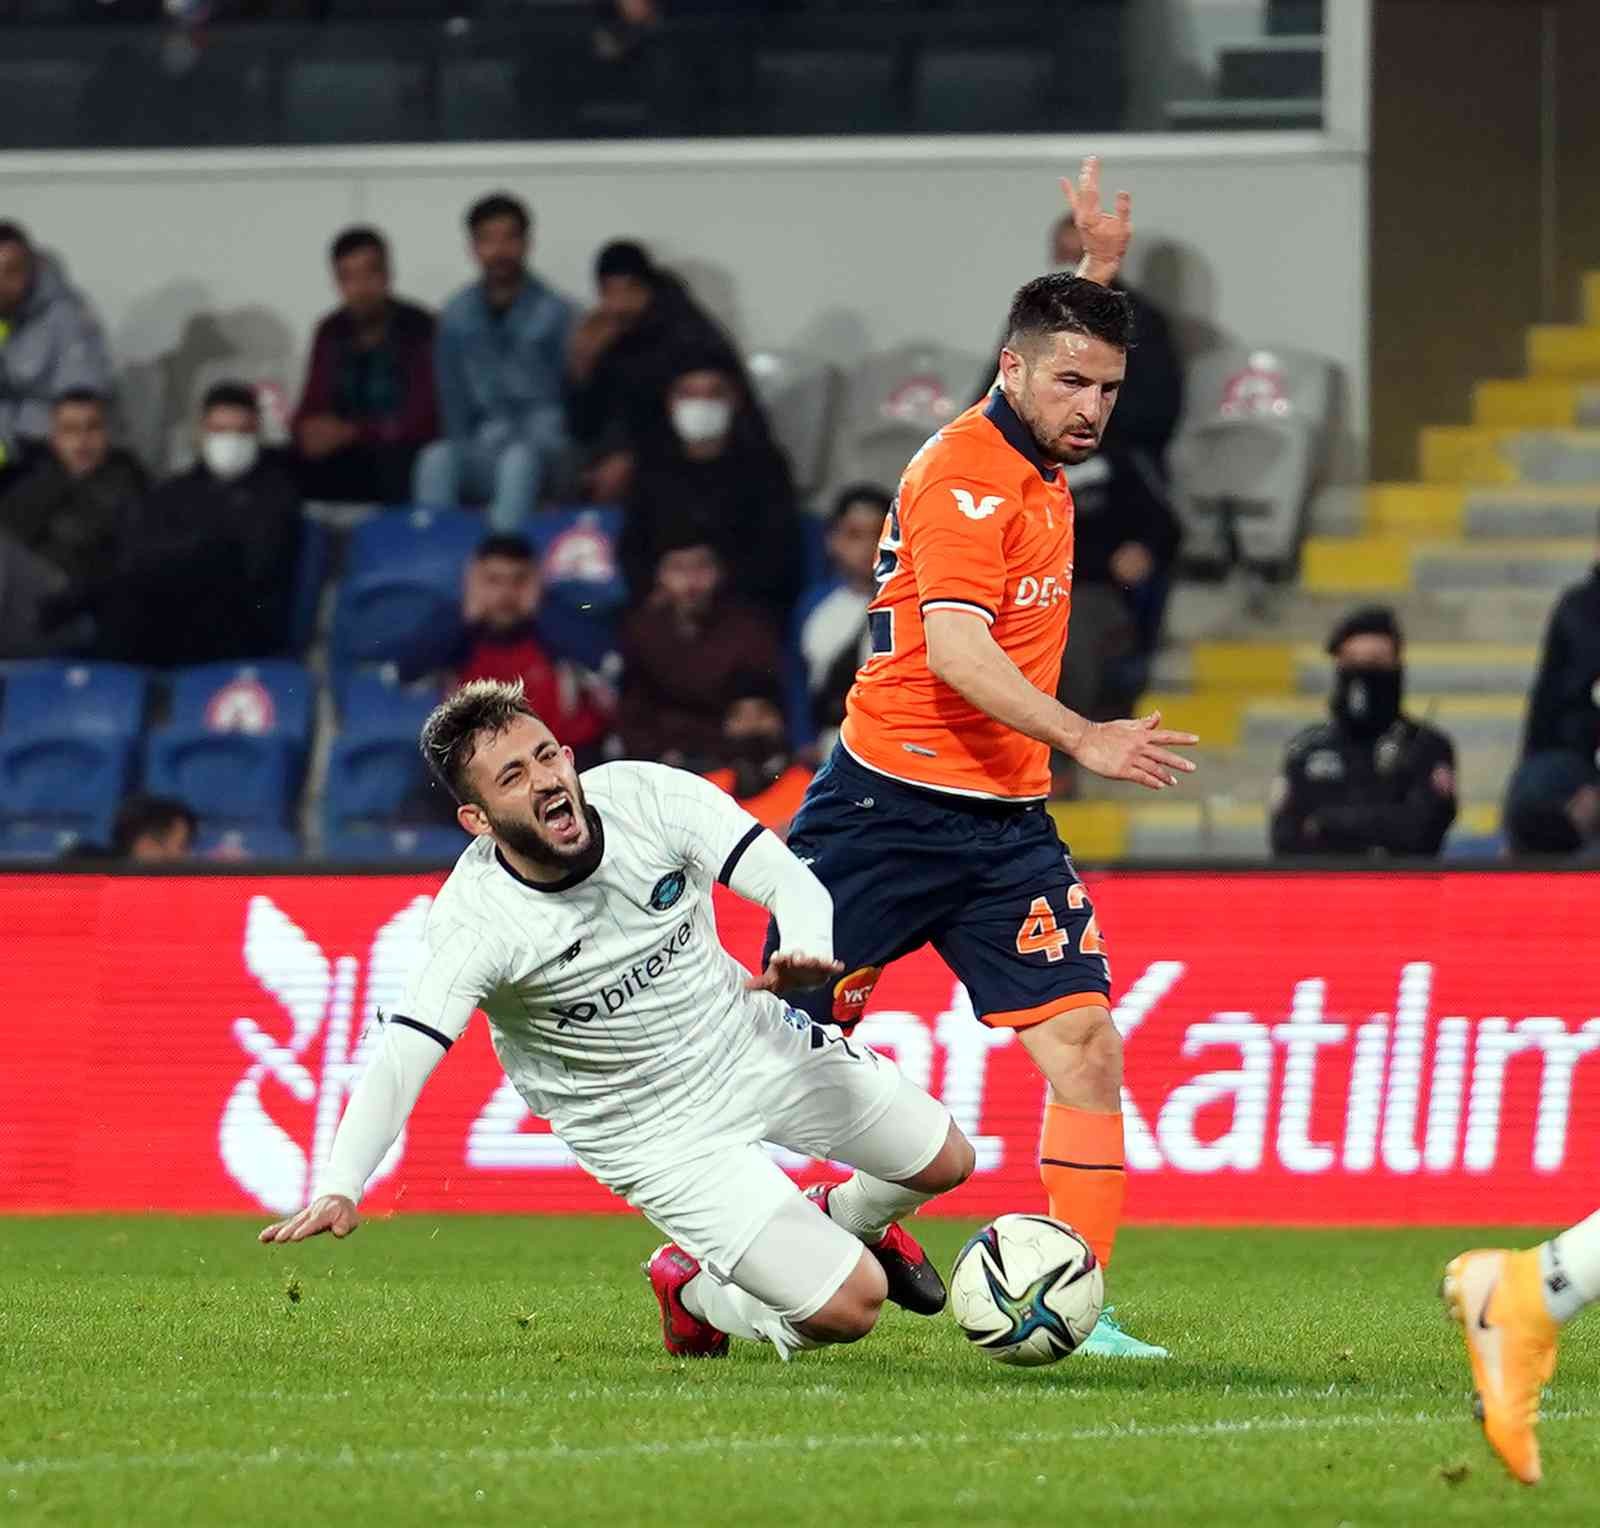 Spor Toto Süper Lig: Medipol Başakşehir: 2 - Adana Demirspor: 1 (Maç sonucu) #istanbul